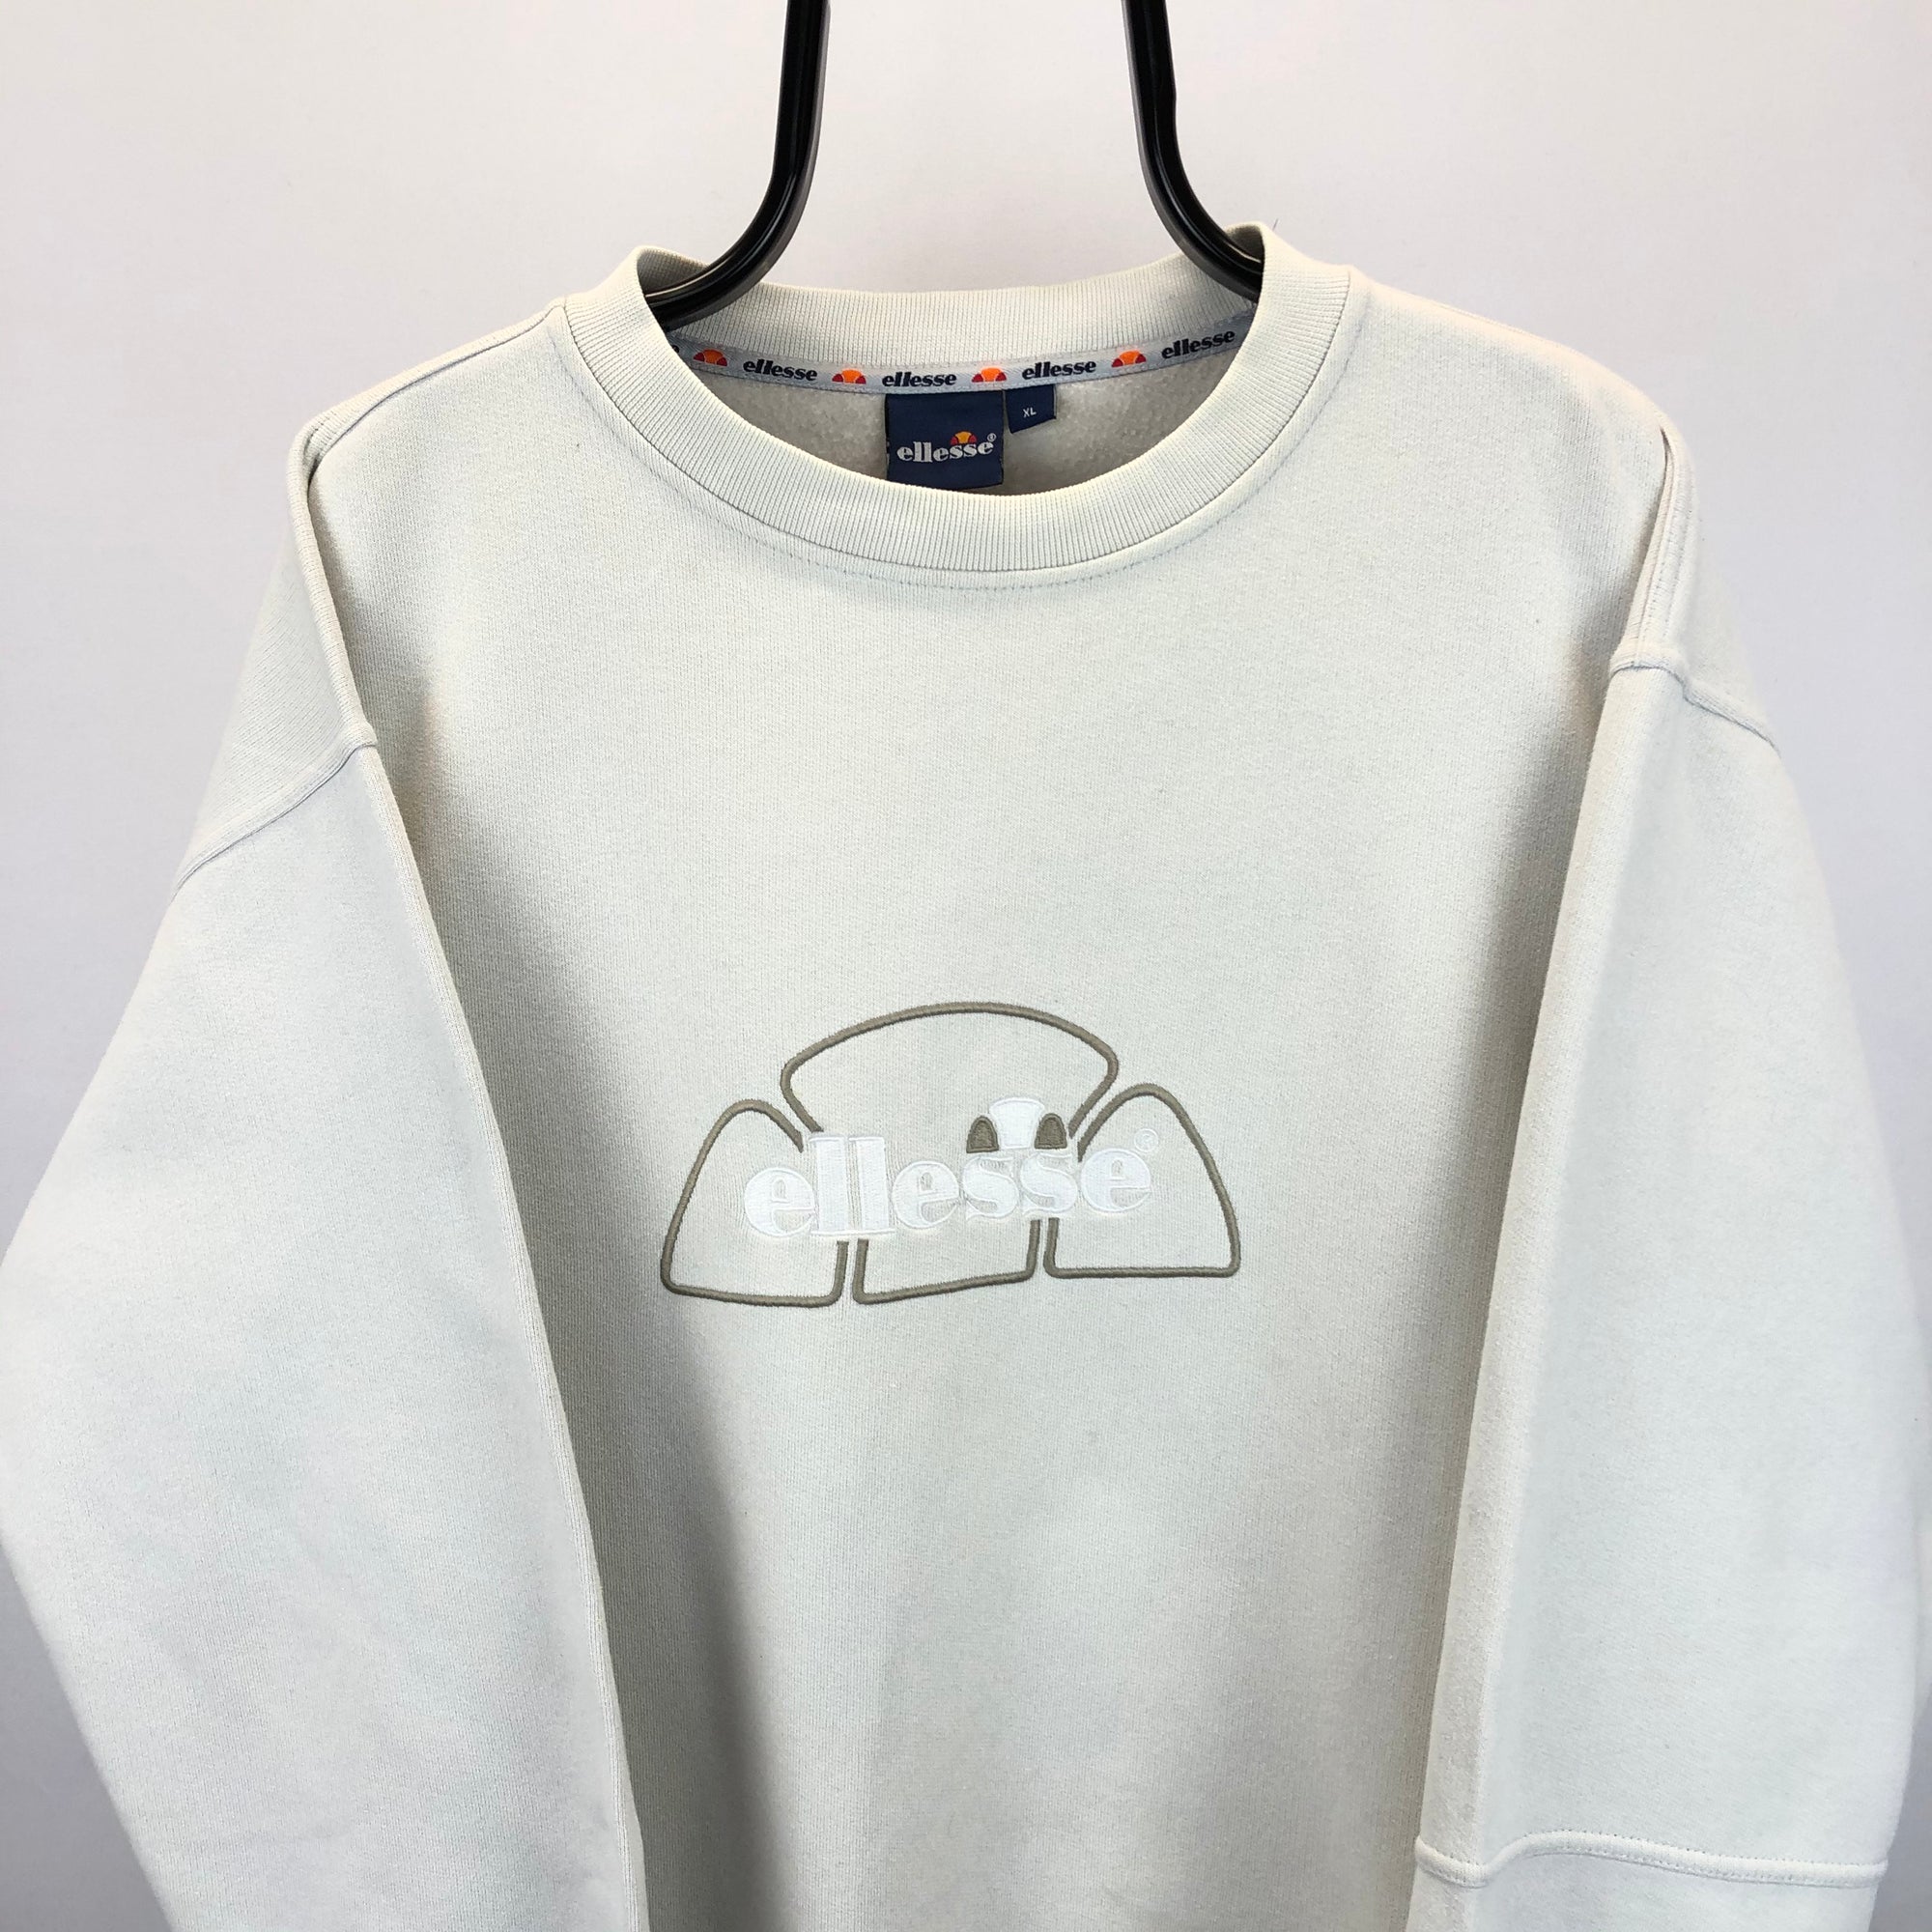 Vintage 90s Ellesse Spellout Sweatshirt in Stone - Men's Large/Women's XL